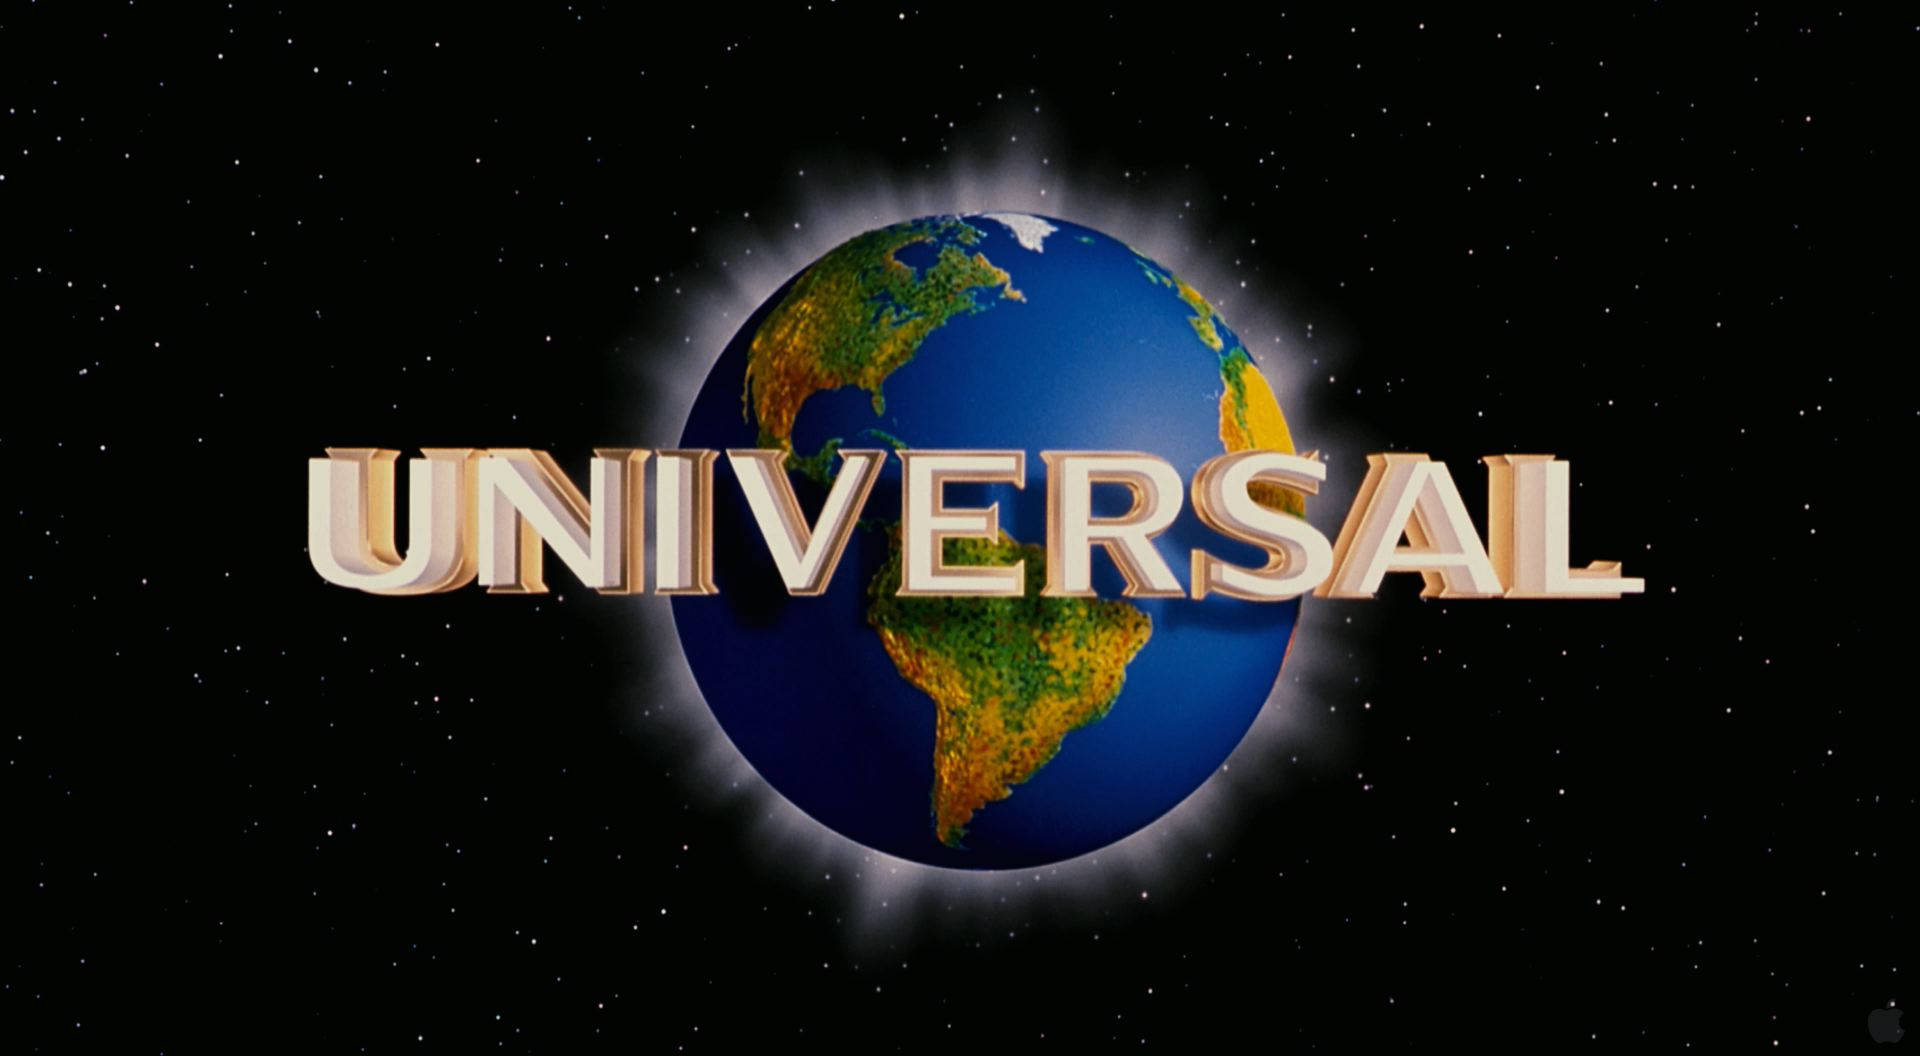 Universal Studios Classic Logo Wallpaper